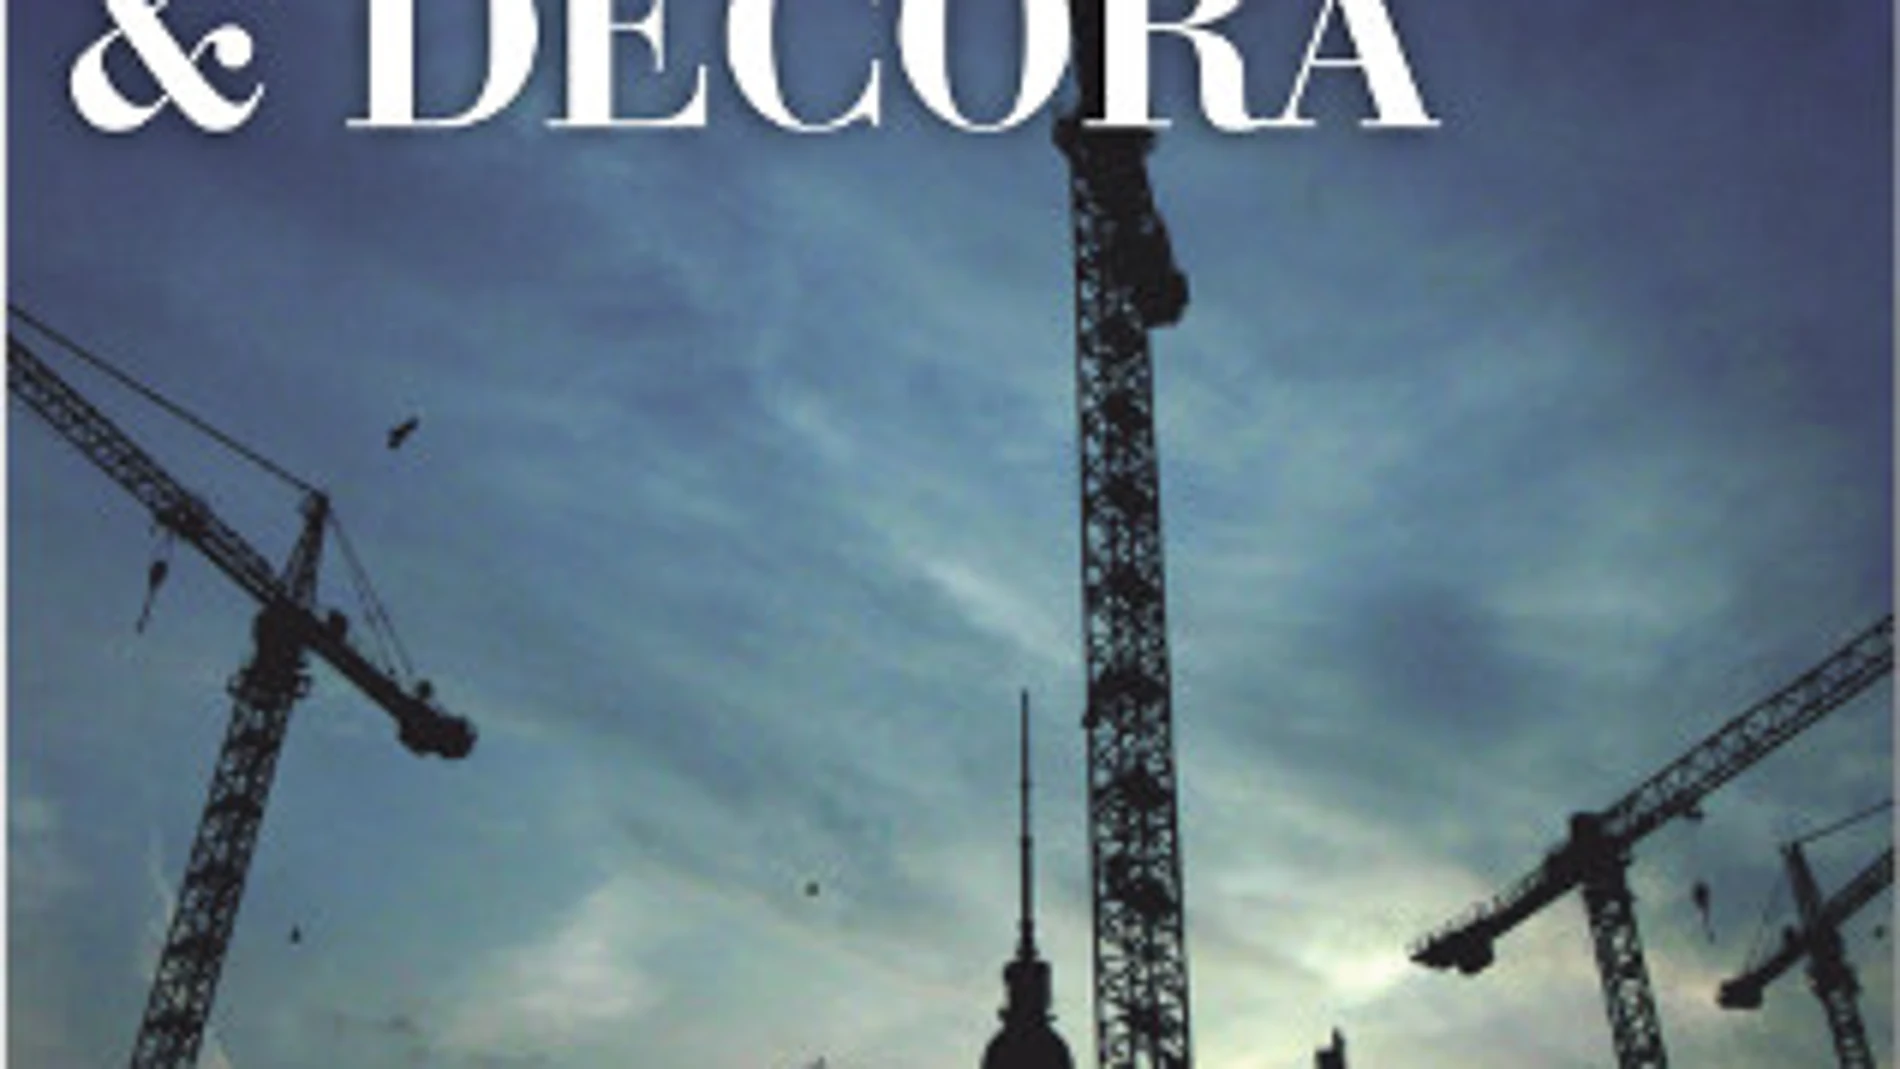 Construye & Decora